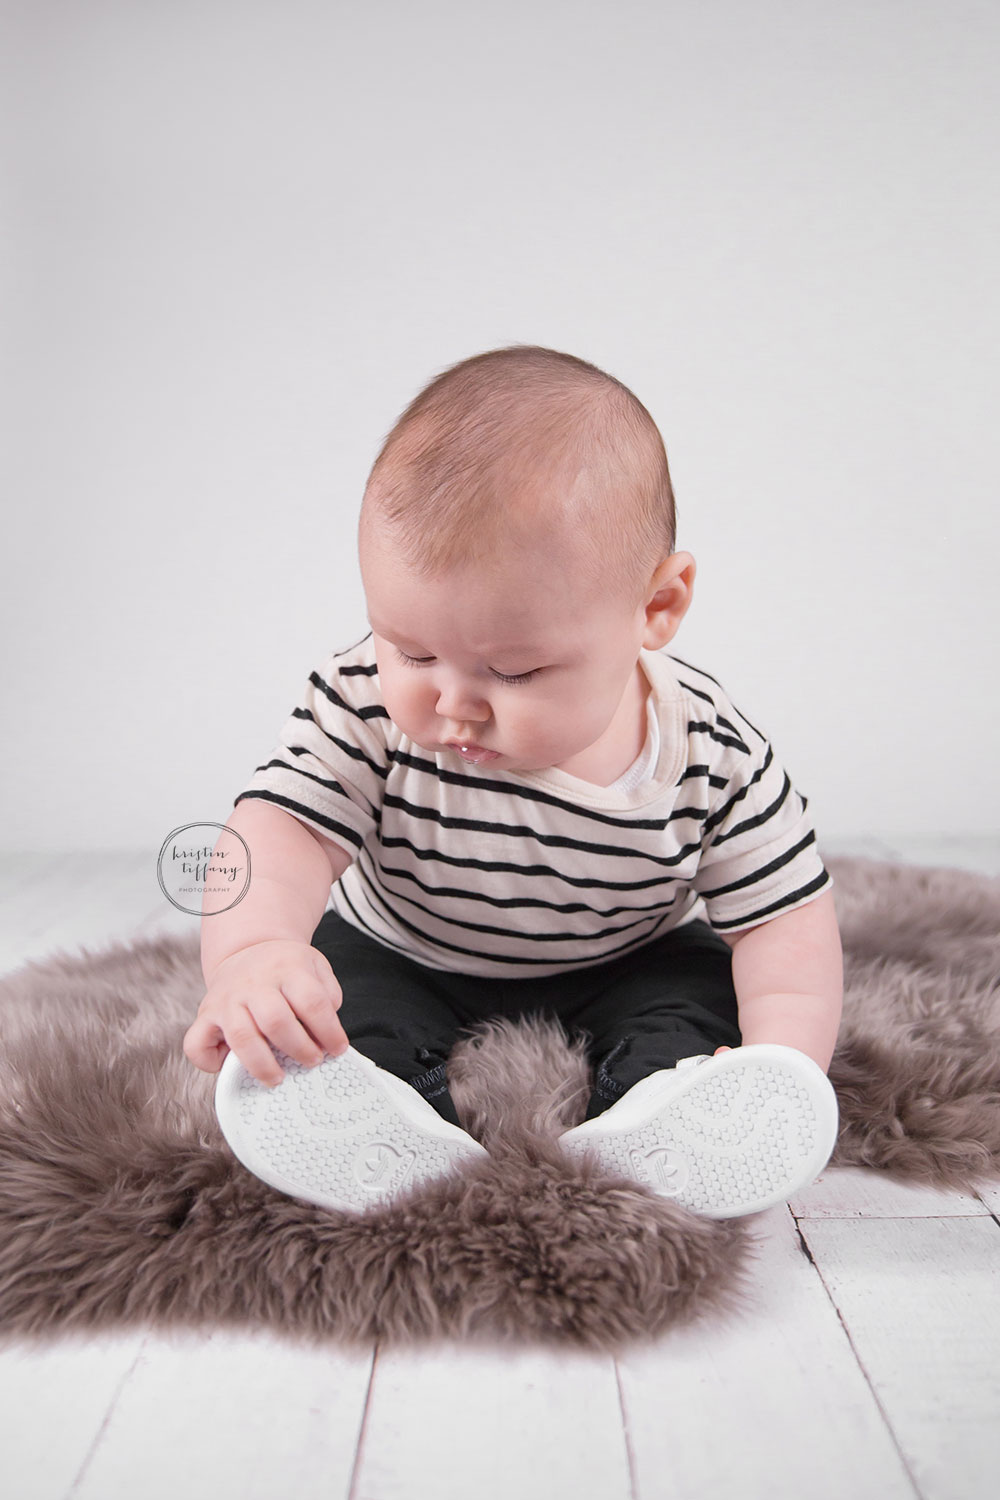 a photo of a baby boy on a fur rug